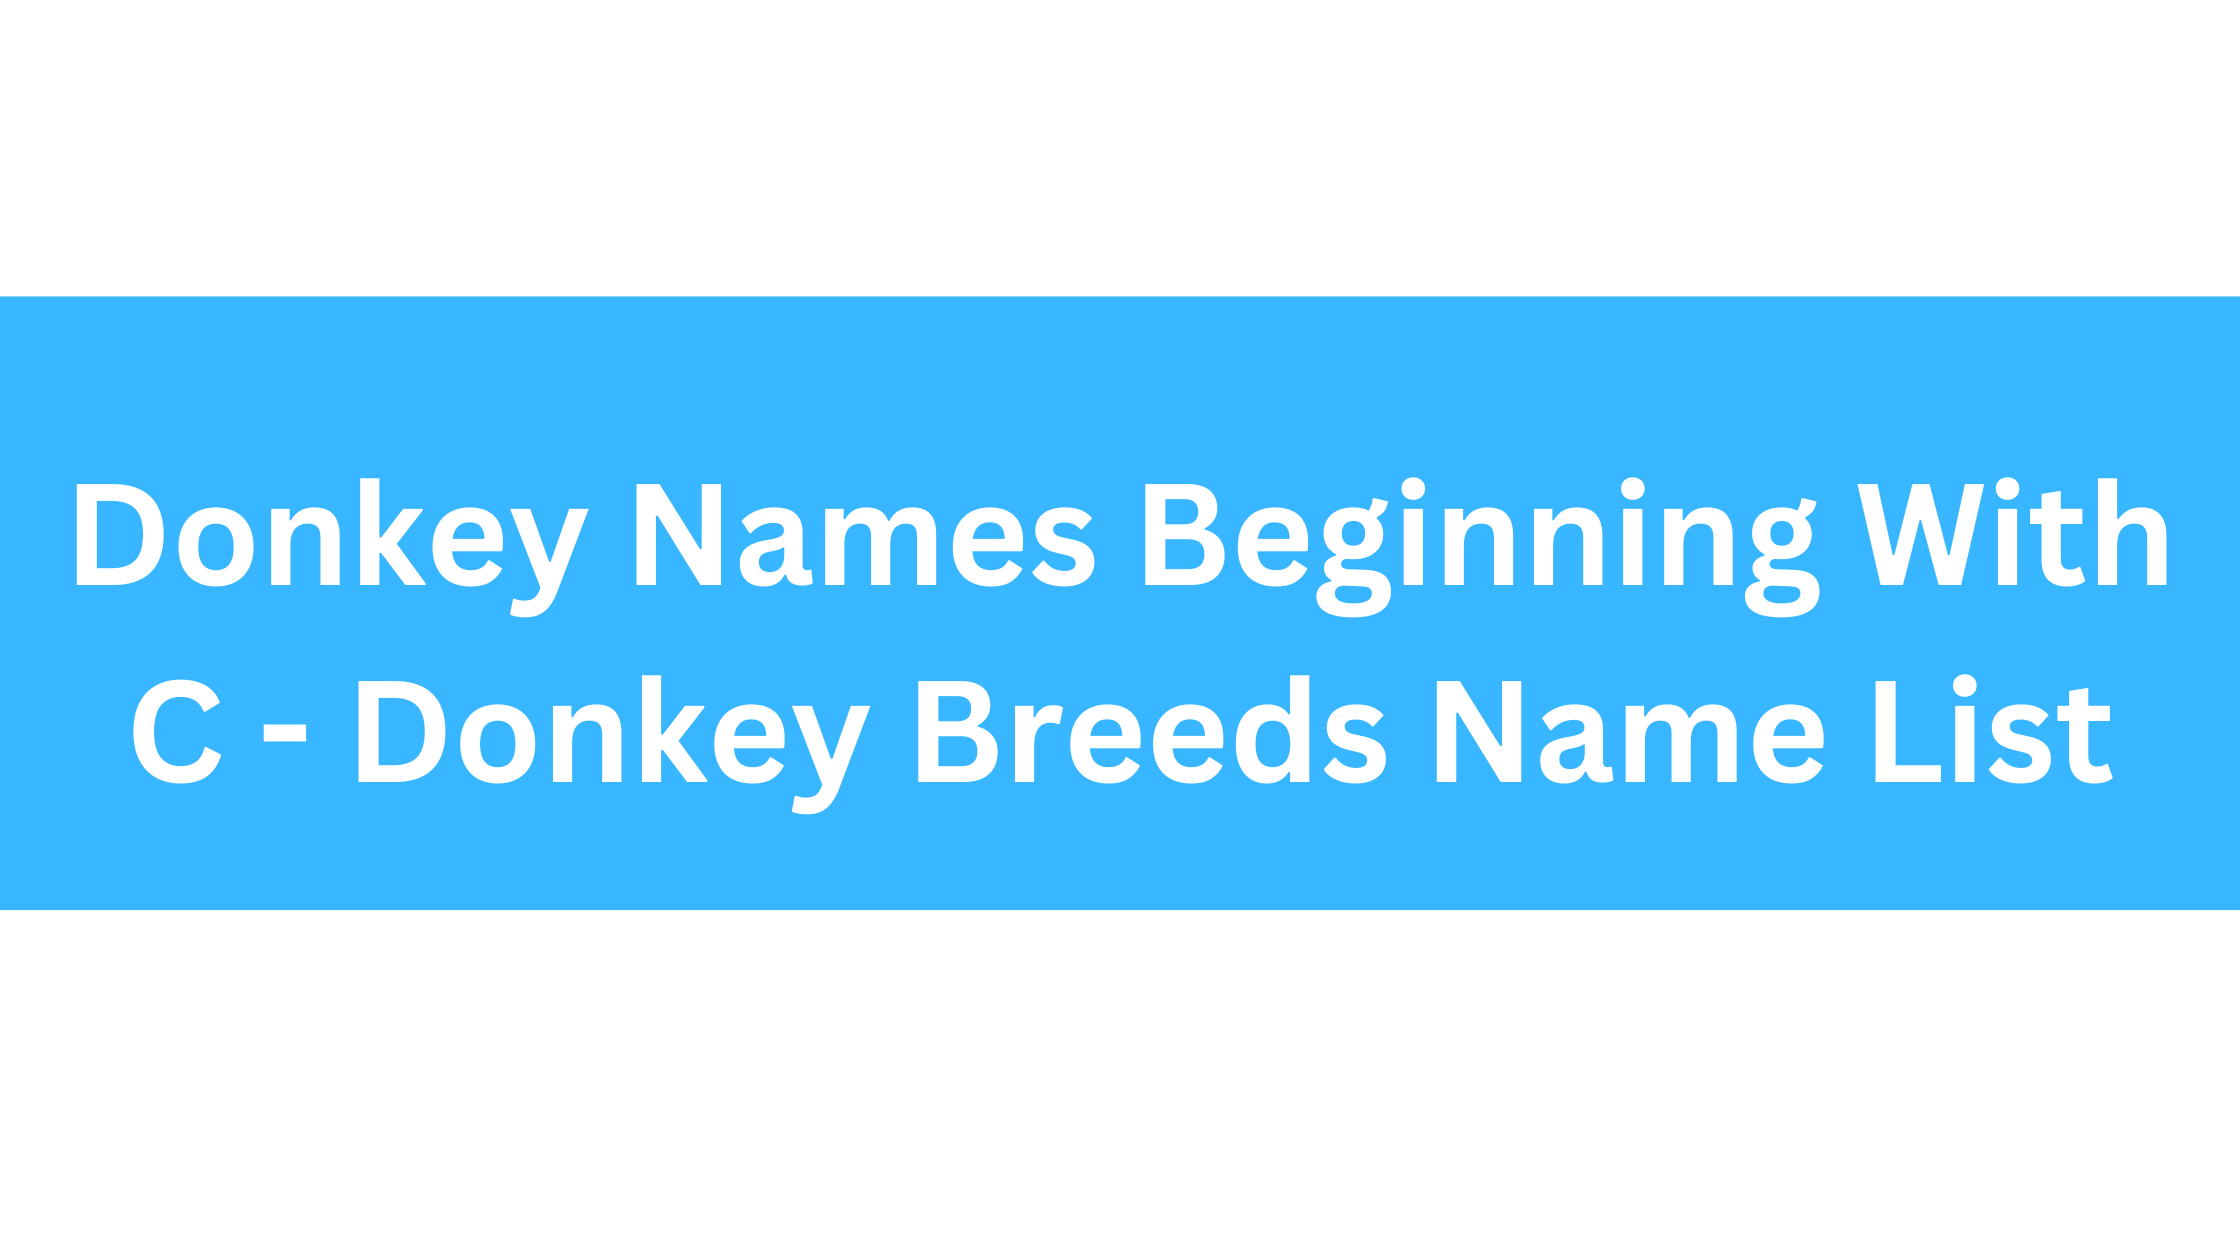 Donkey Names Beginning With C